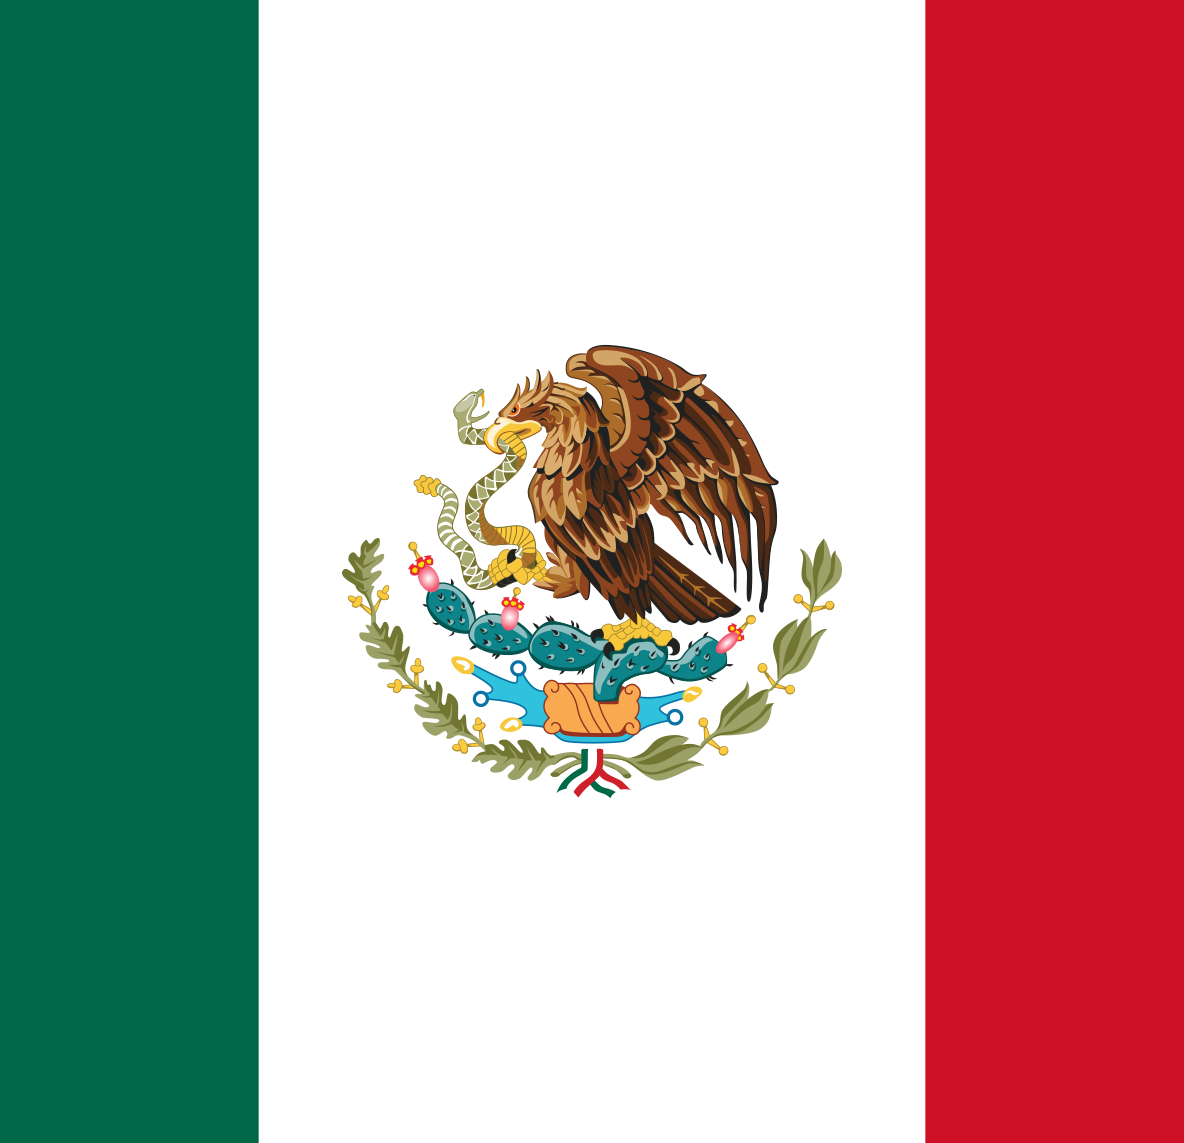 Mexico Market Review - May 2019